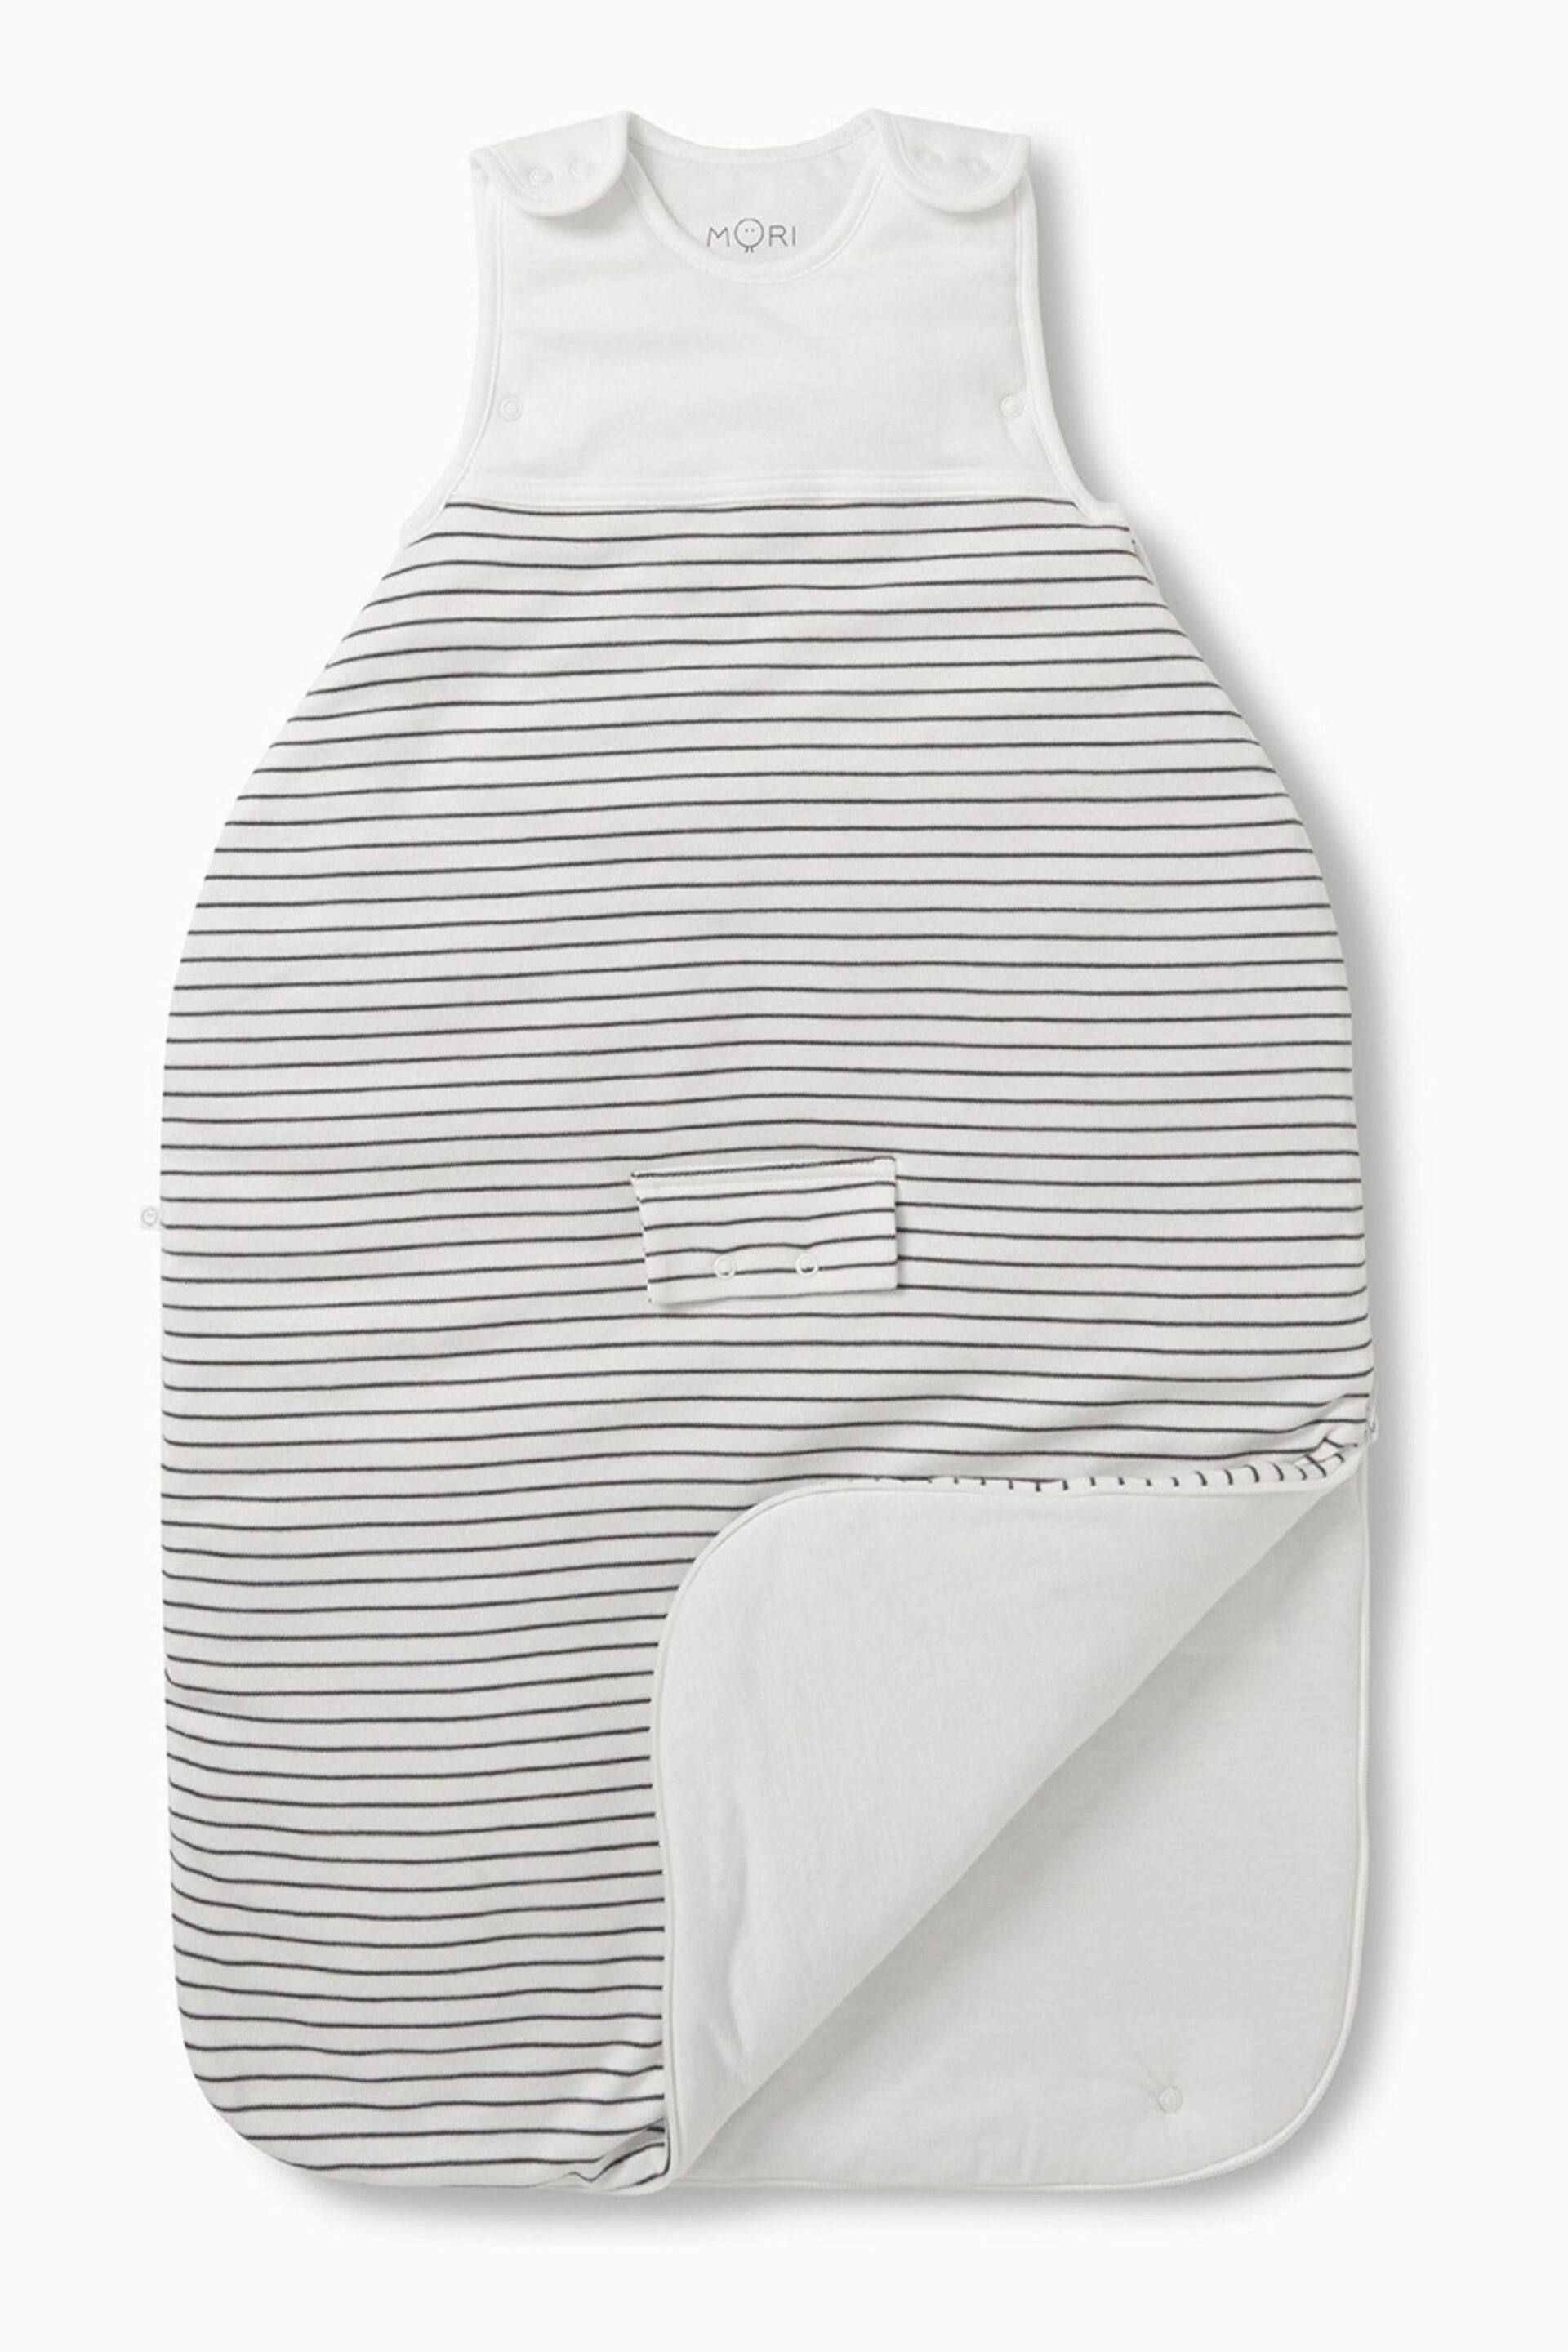 MORI Grey Stripe Clever 2.5 TOG Sleeping Bag - Image 3 of 3